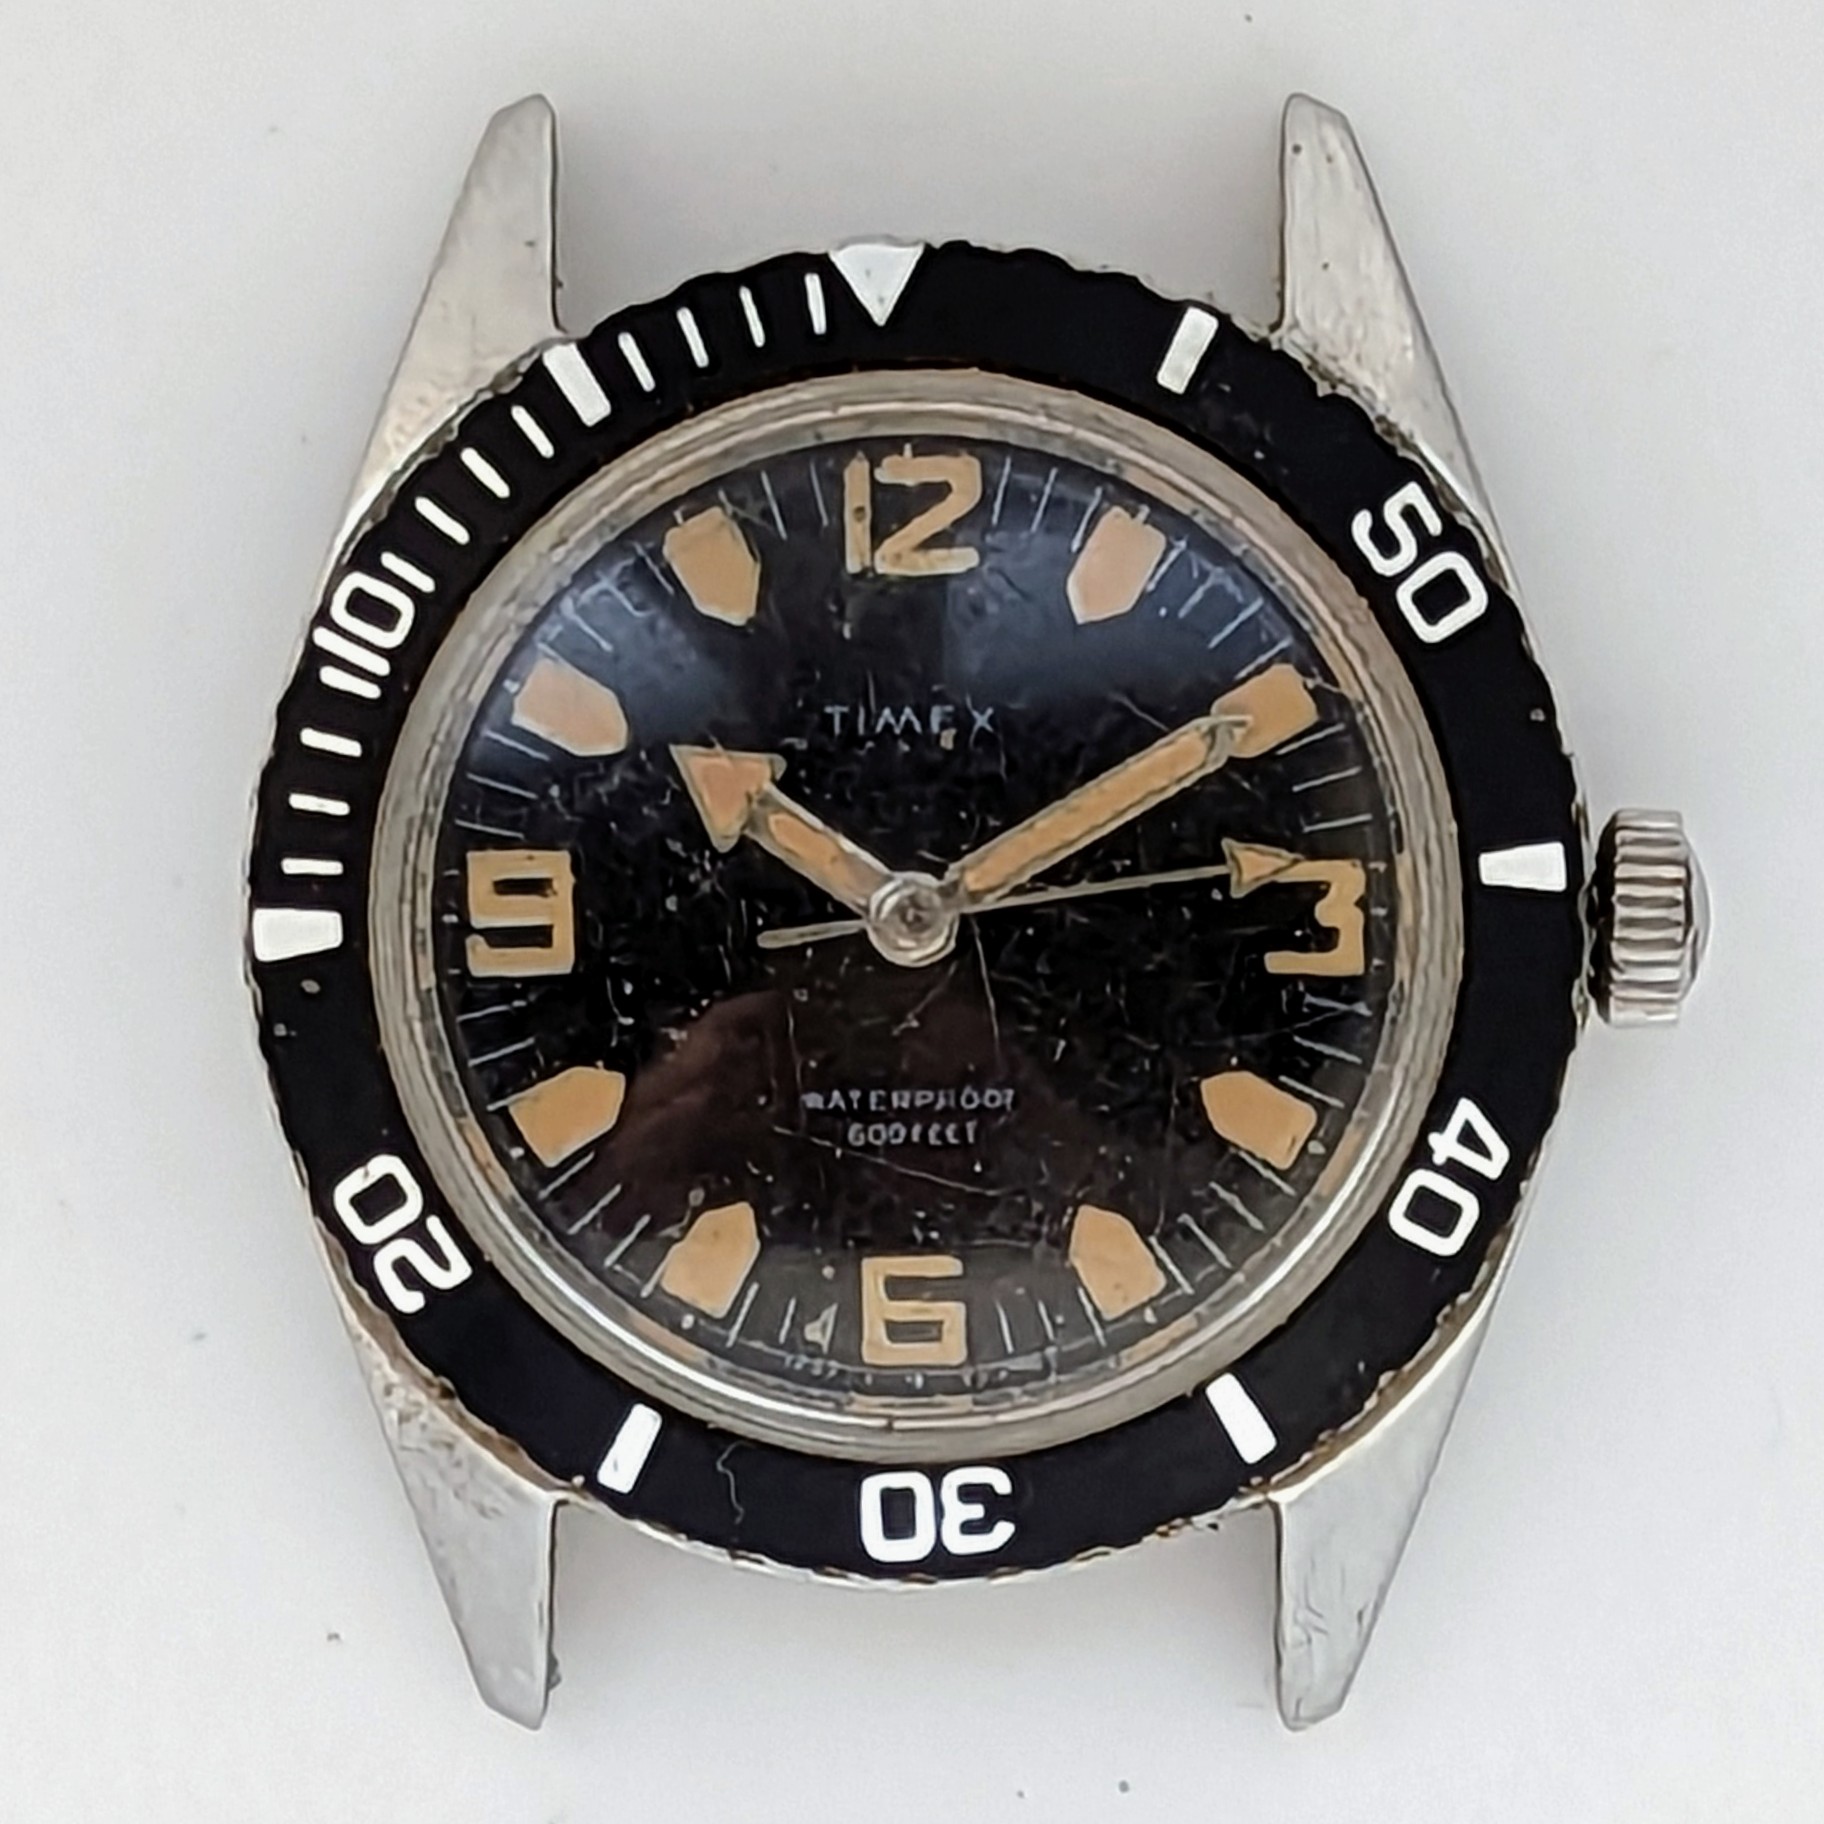 Timex Skindiver 1257 2467 [1967] 600 Feet